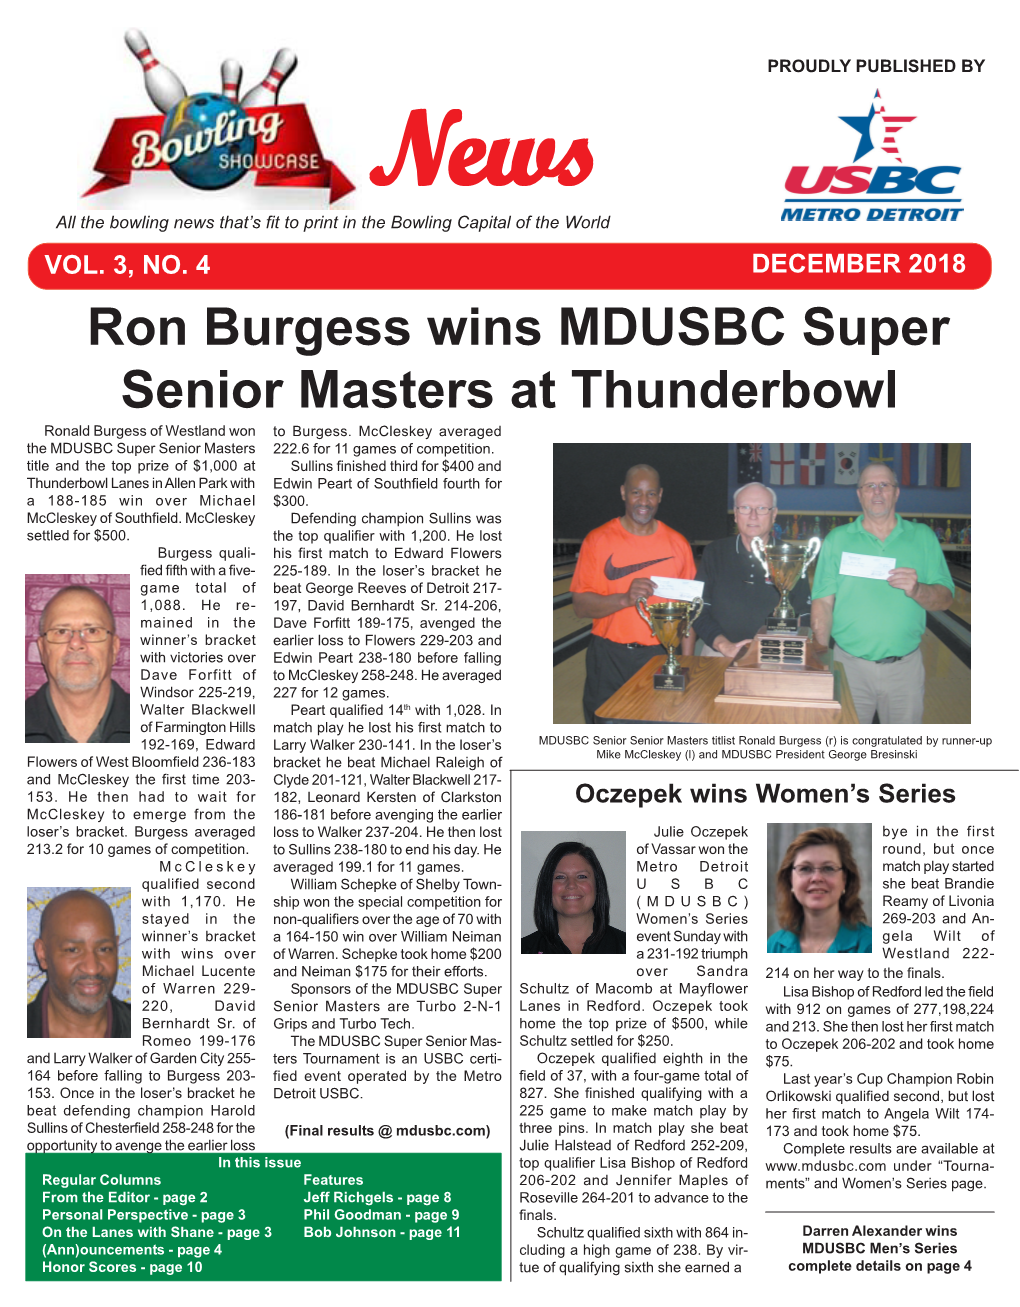 DECEMBER 2018 Ron Burgess Wins MDUSBC Super Senior Masters at Thunderbowl Ronald Burgess of Westland Won to Burgess